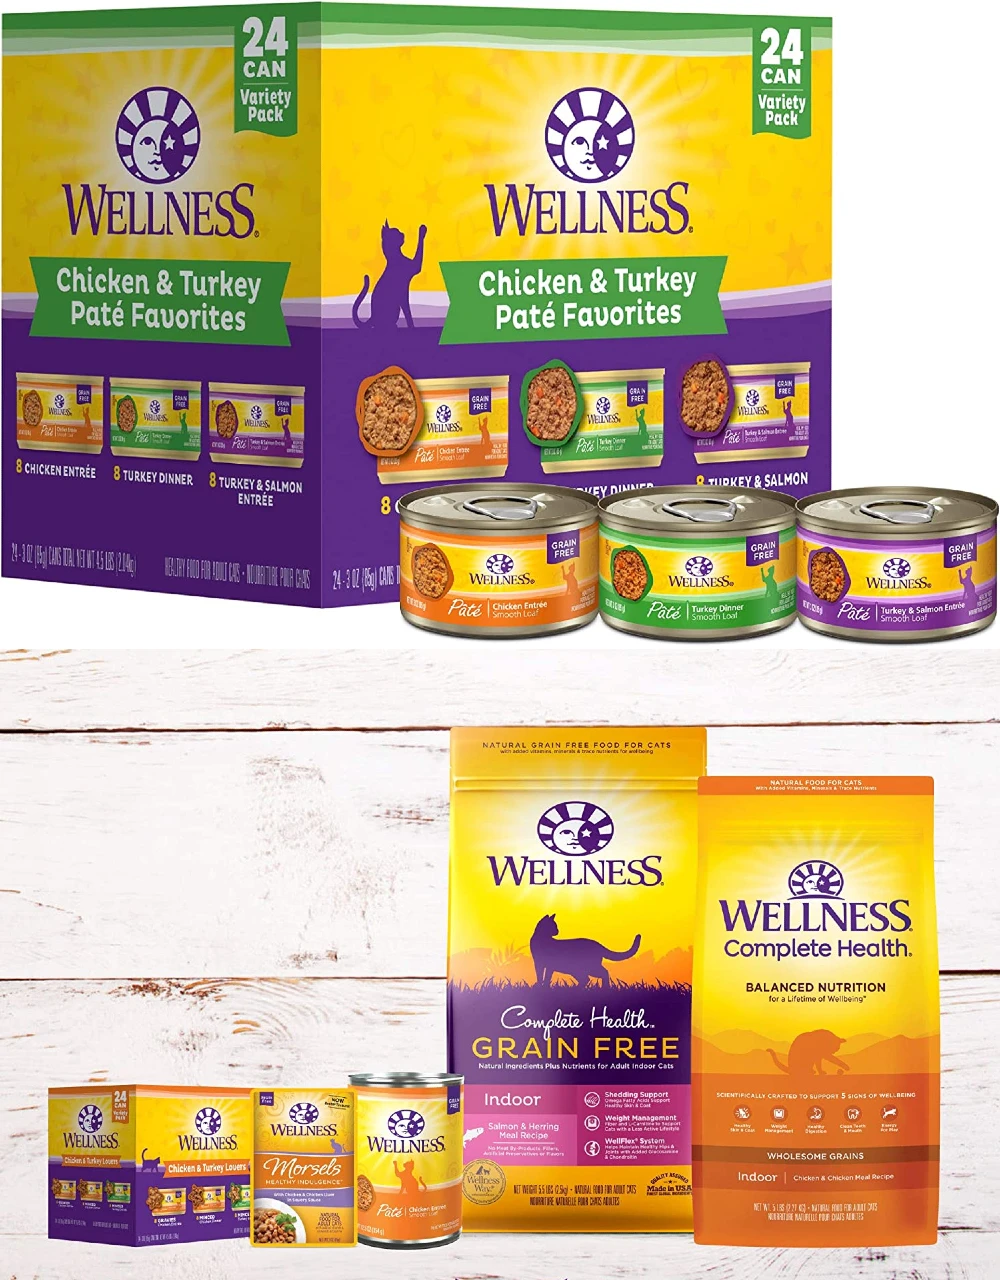 Wellness Complete Health Grain Free Wet Cat Food Pate